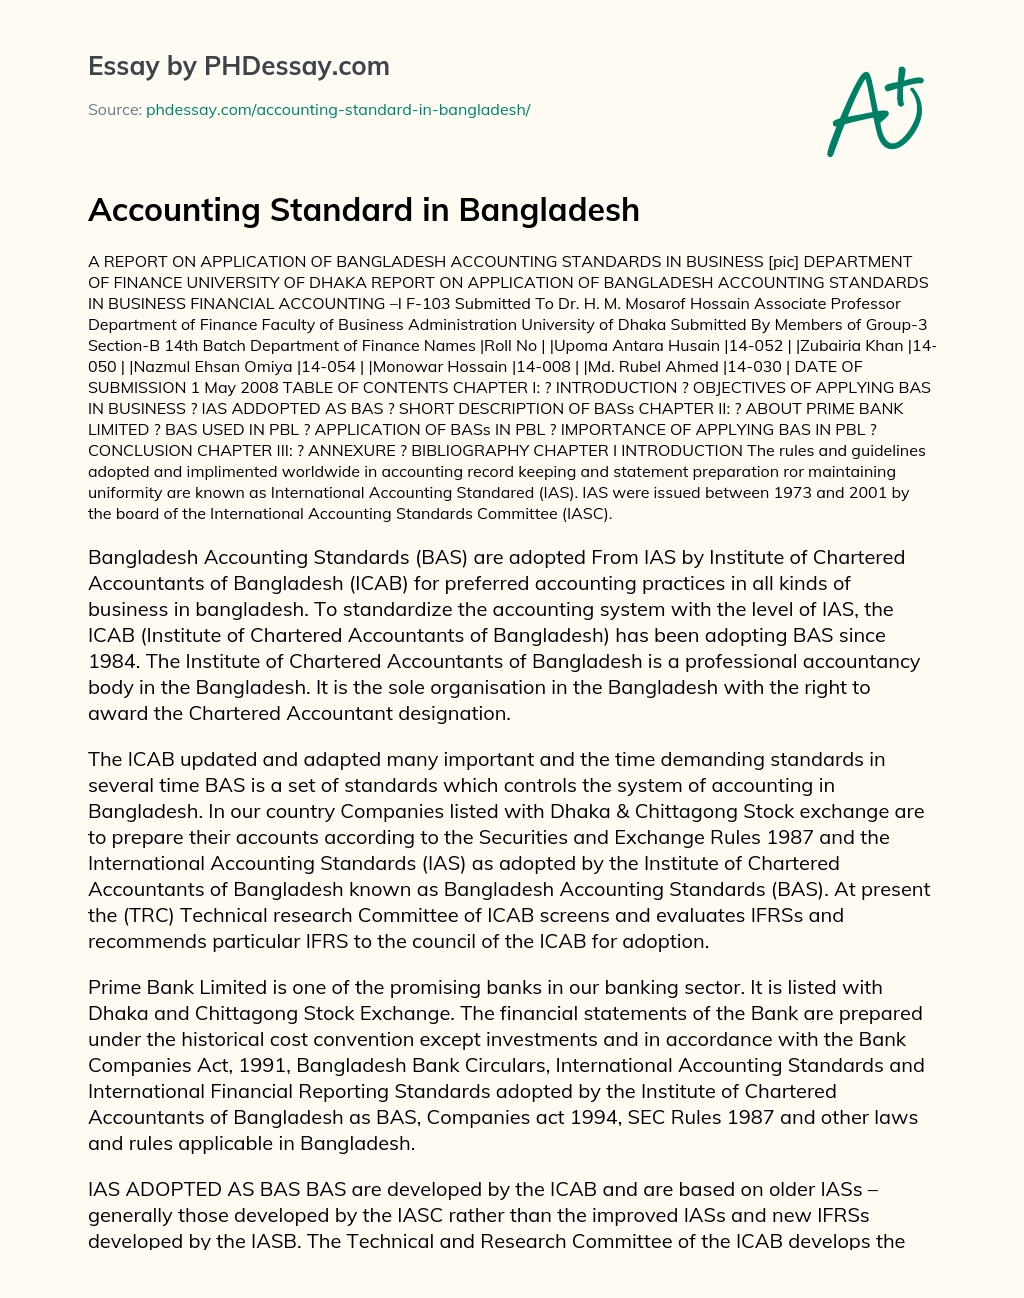 Accounting Standard in Bangladesh essay